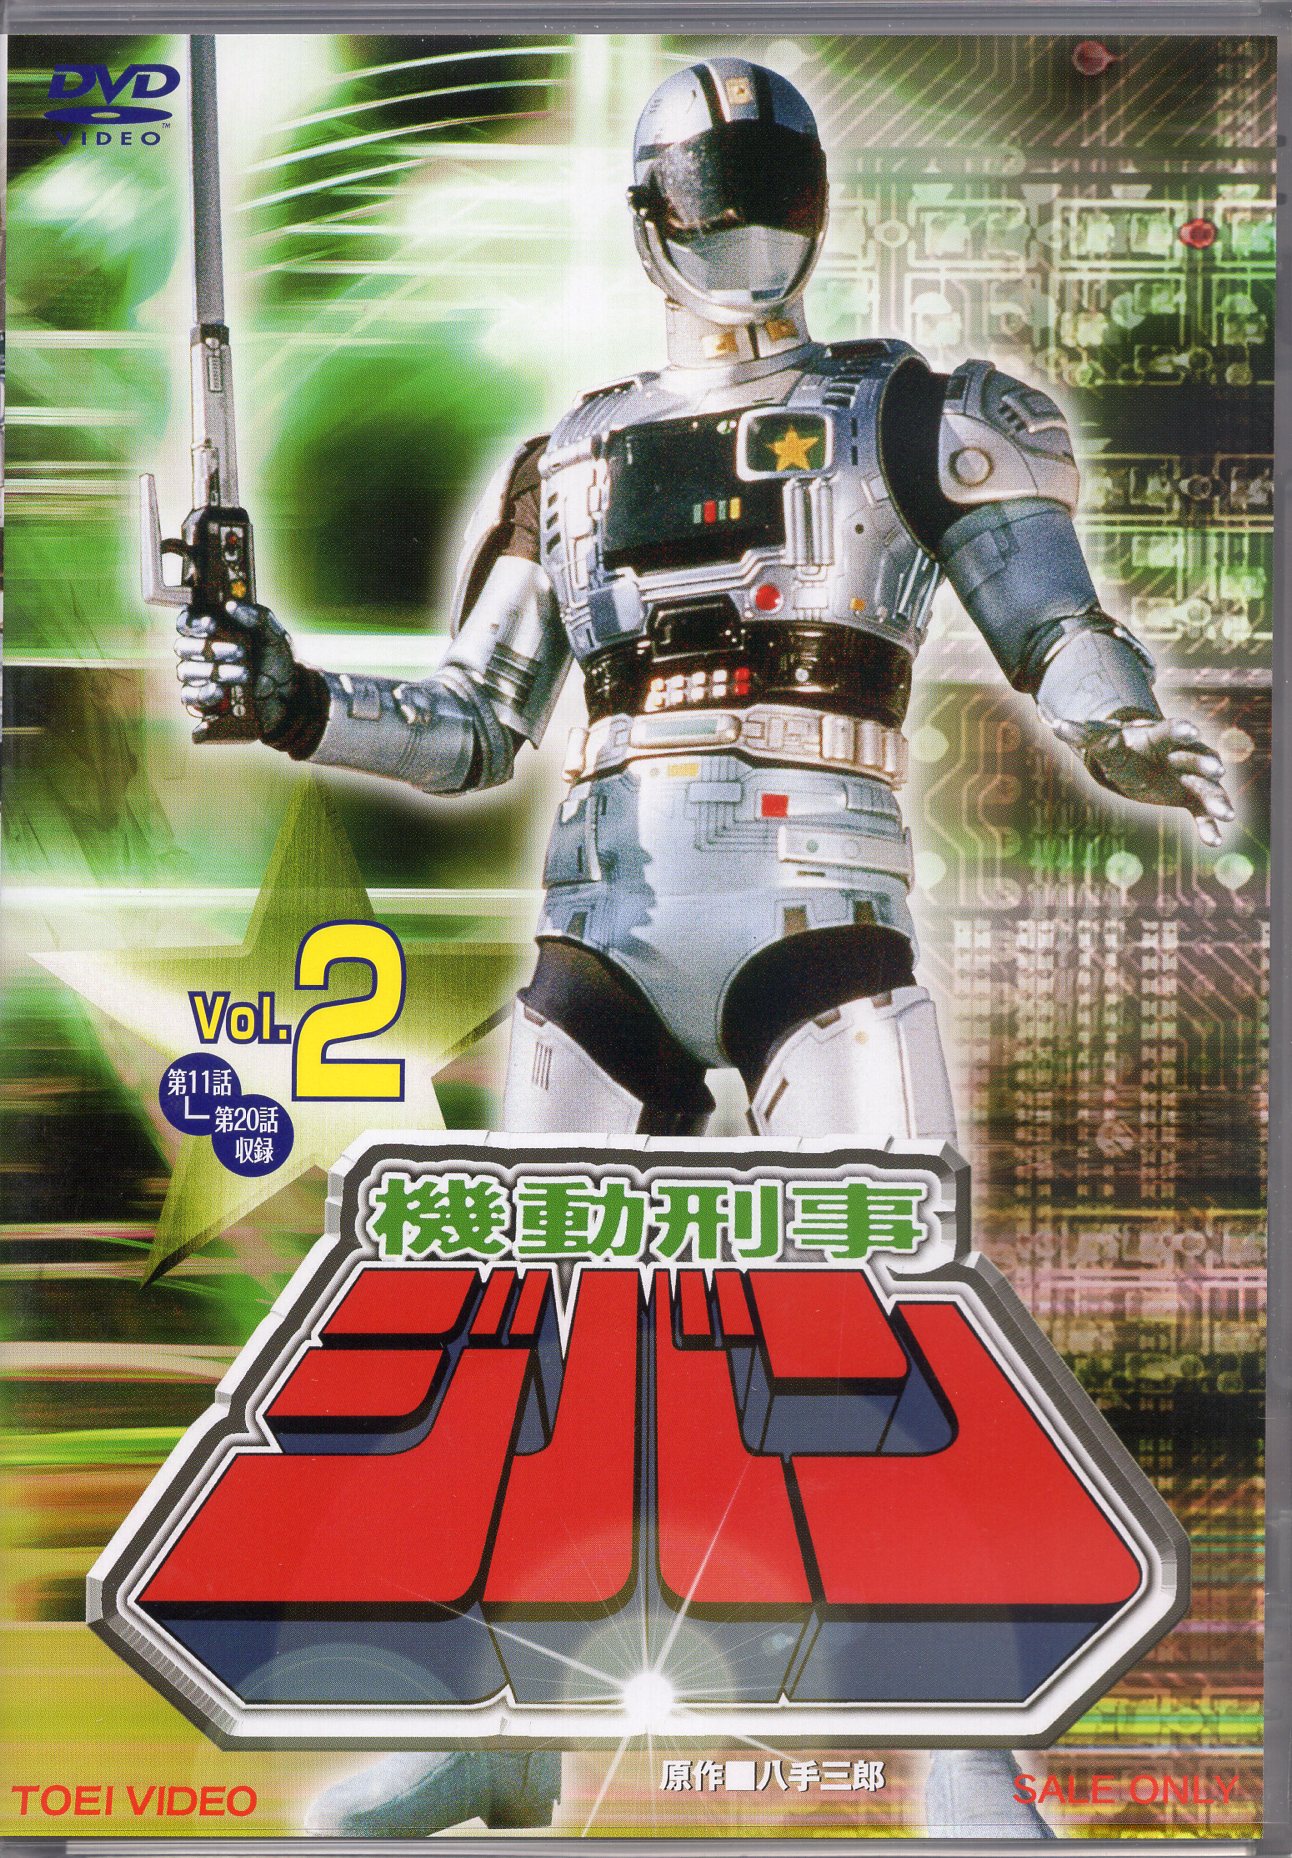 Jiban metal hero toei tokusatsu gavan popy chogokin Robocop Bandai 1989  Vinyl | eBay